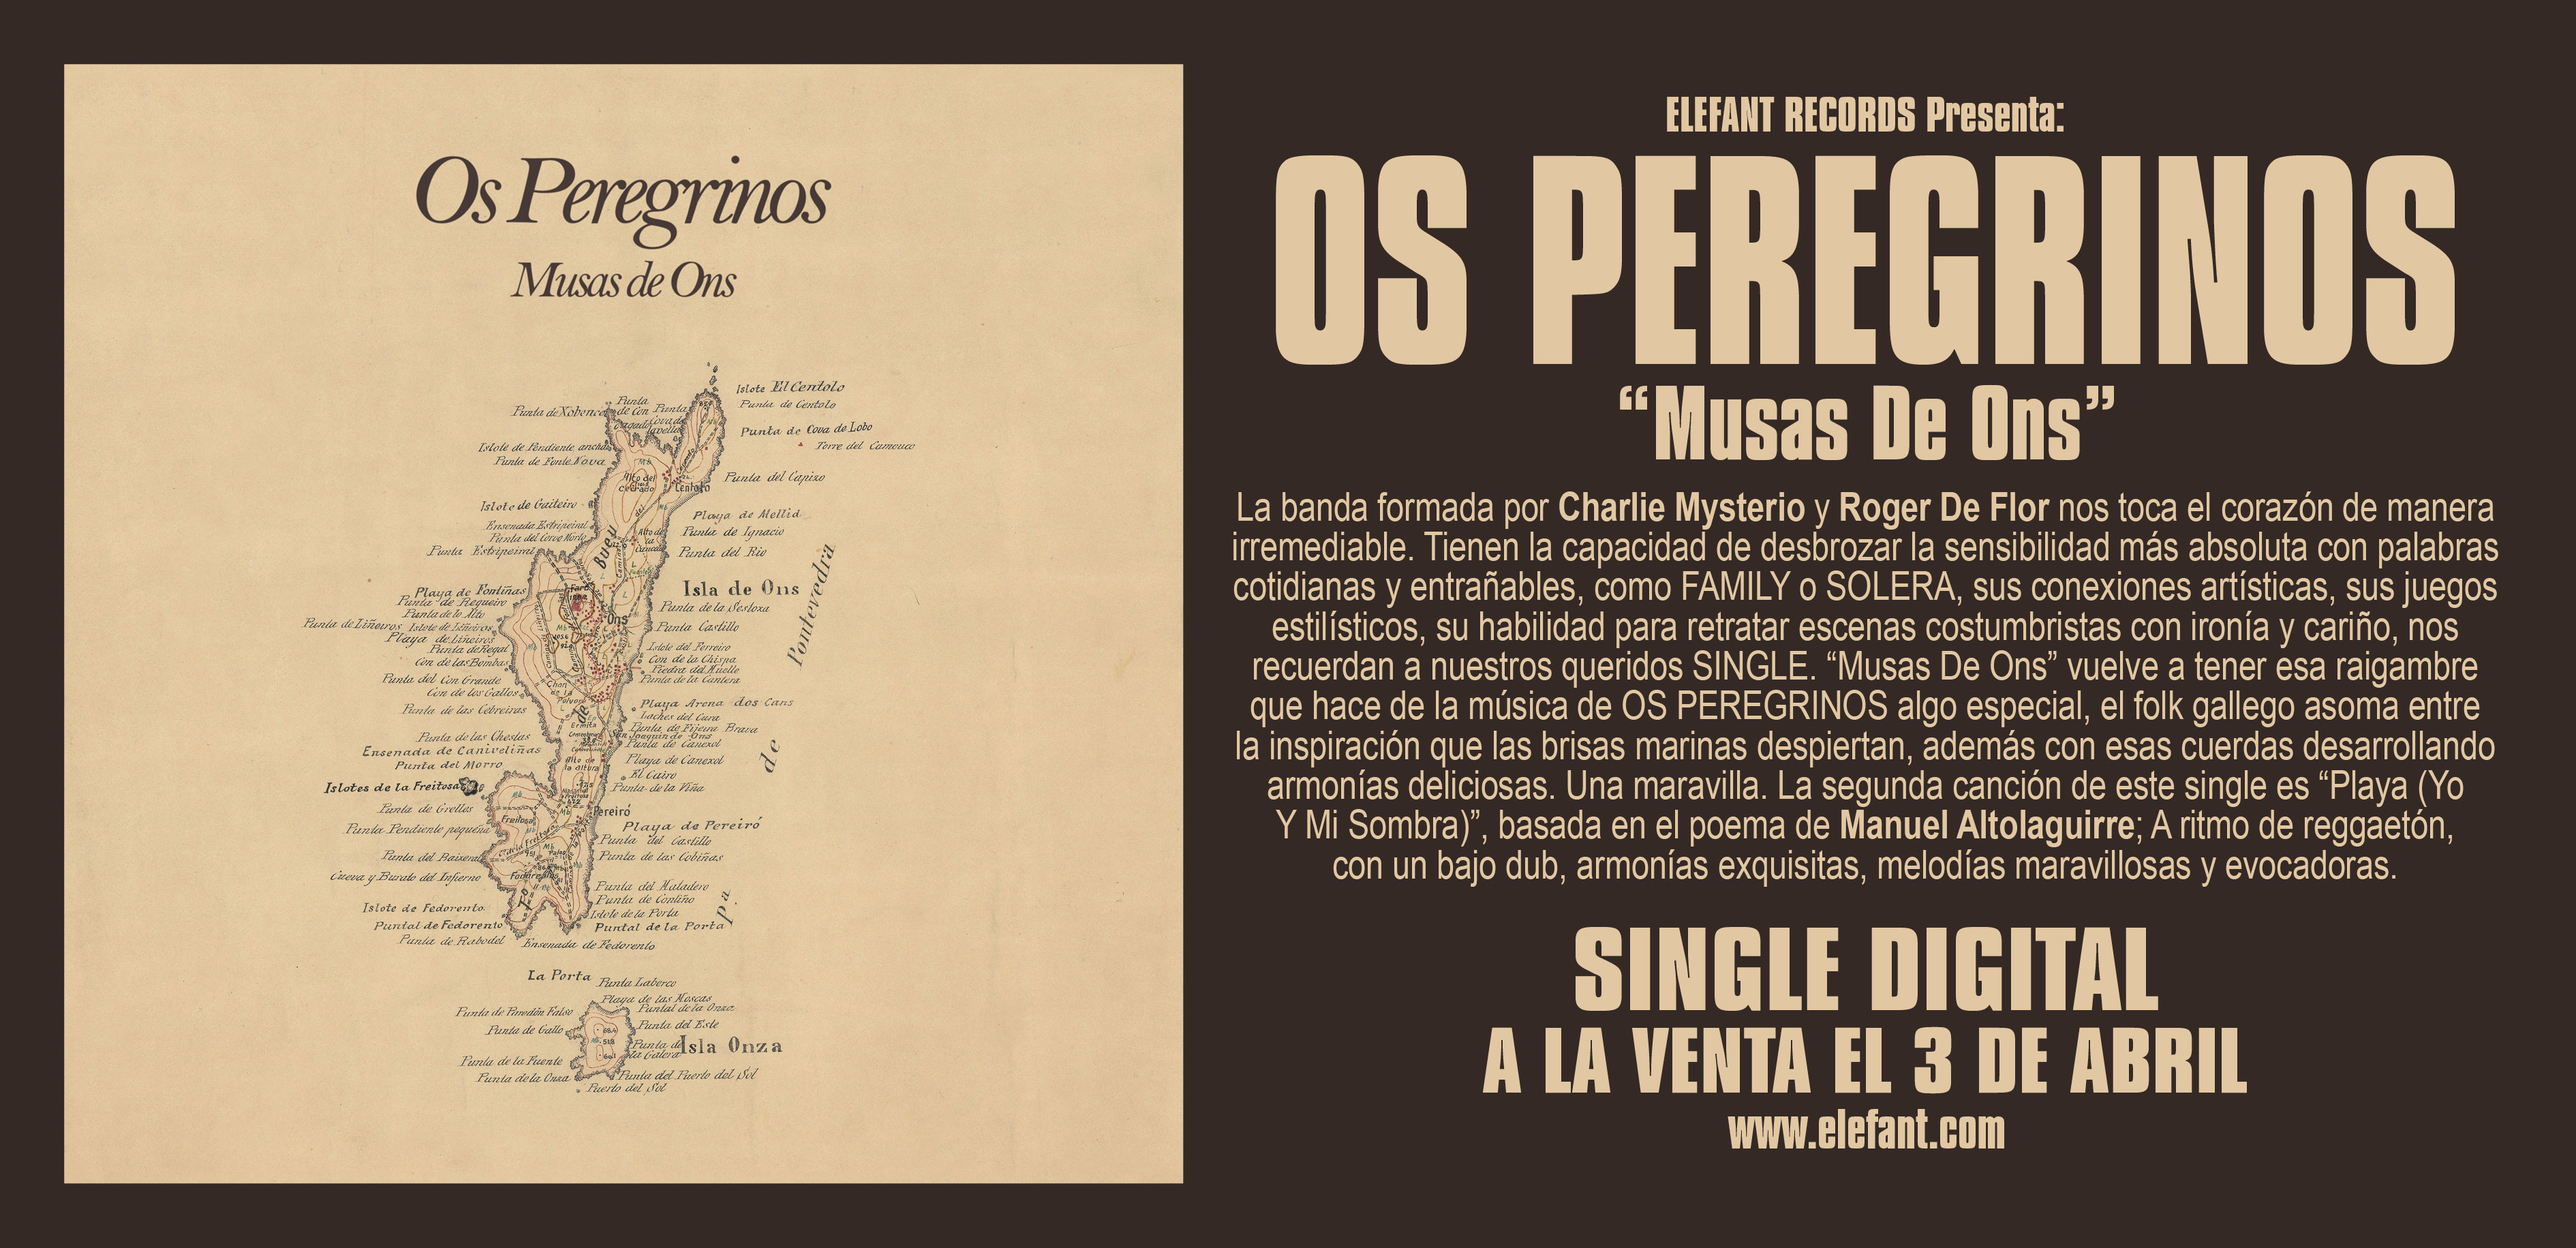 Os Peregrinos "Musas De Ons" Single Digital